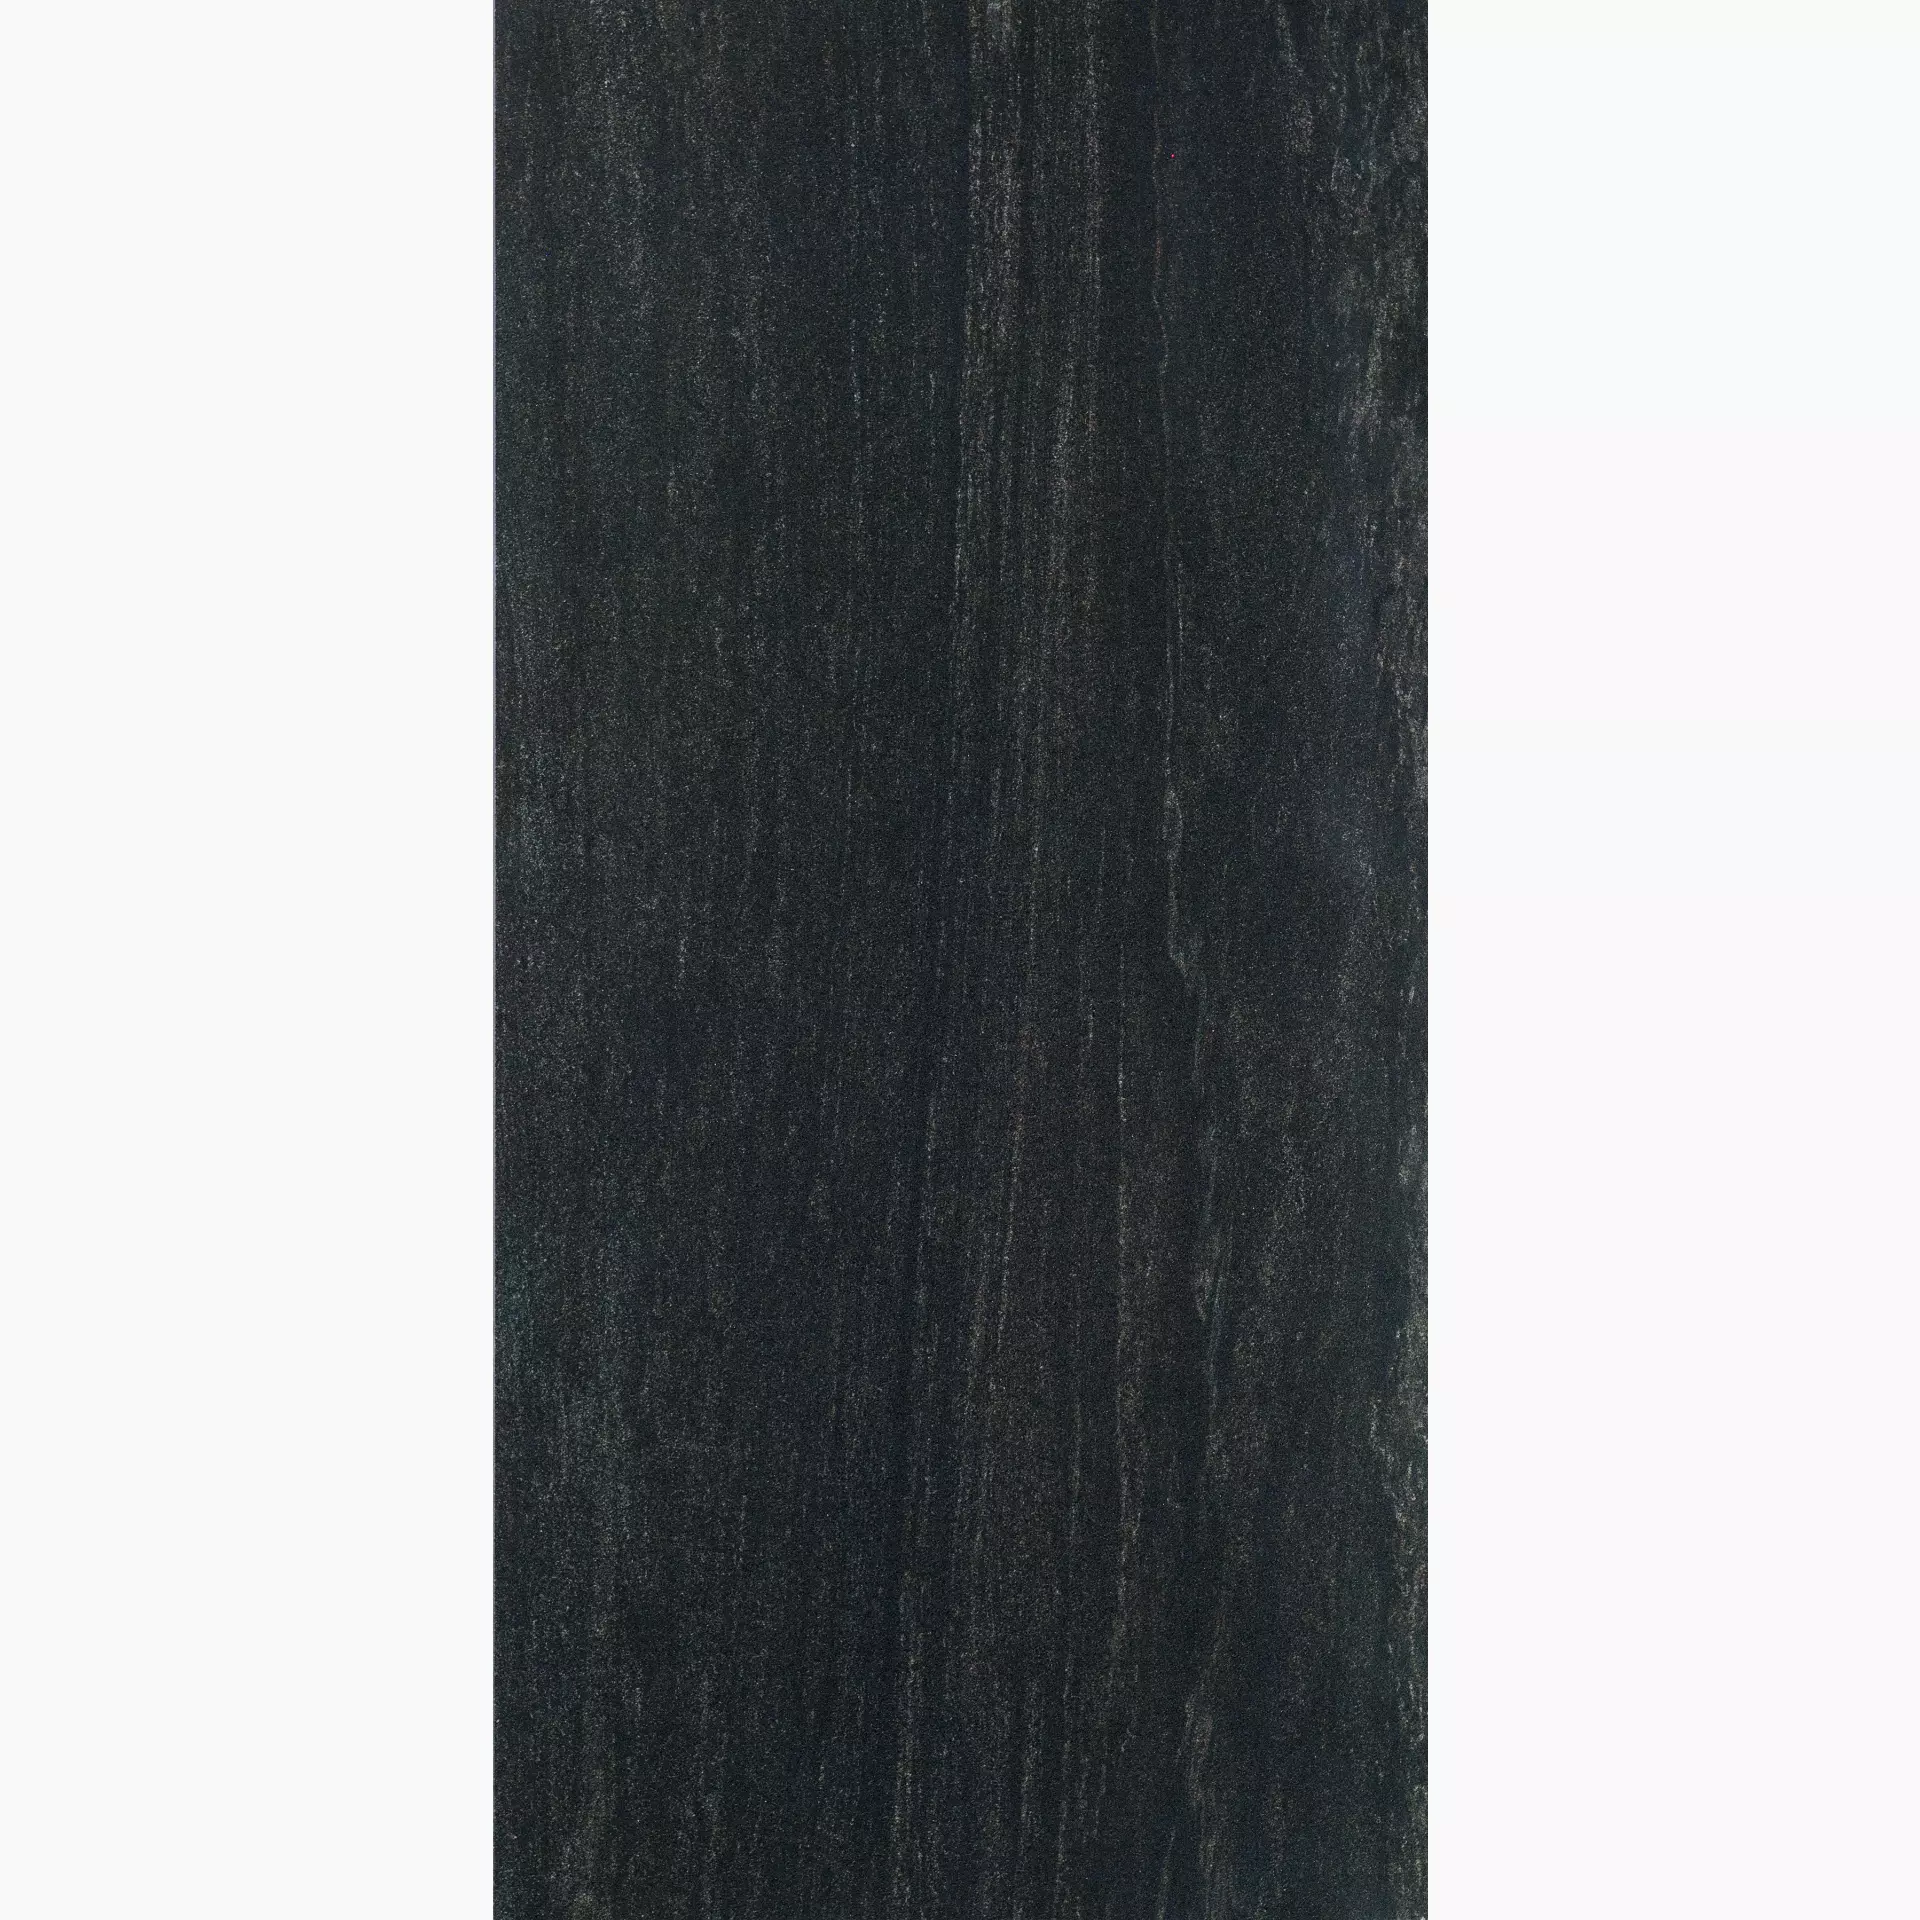 Ergon Stone Project Black Naturale Falda E6L8 60x120cm rectified 9,5mm